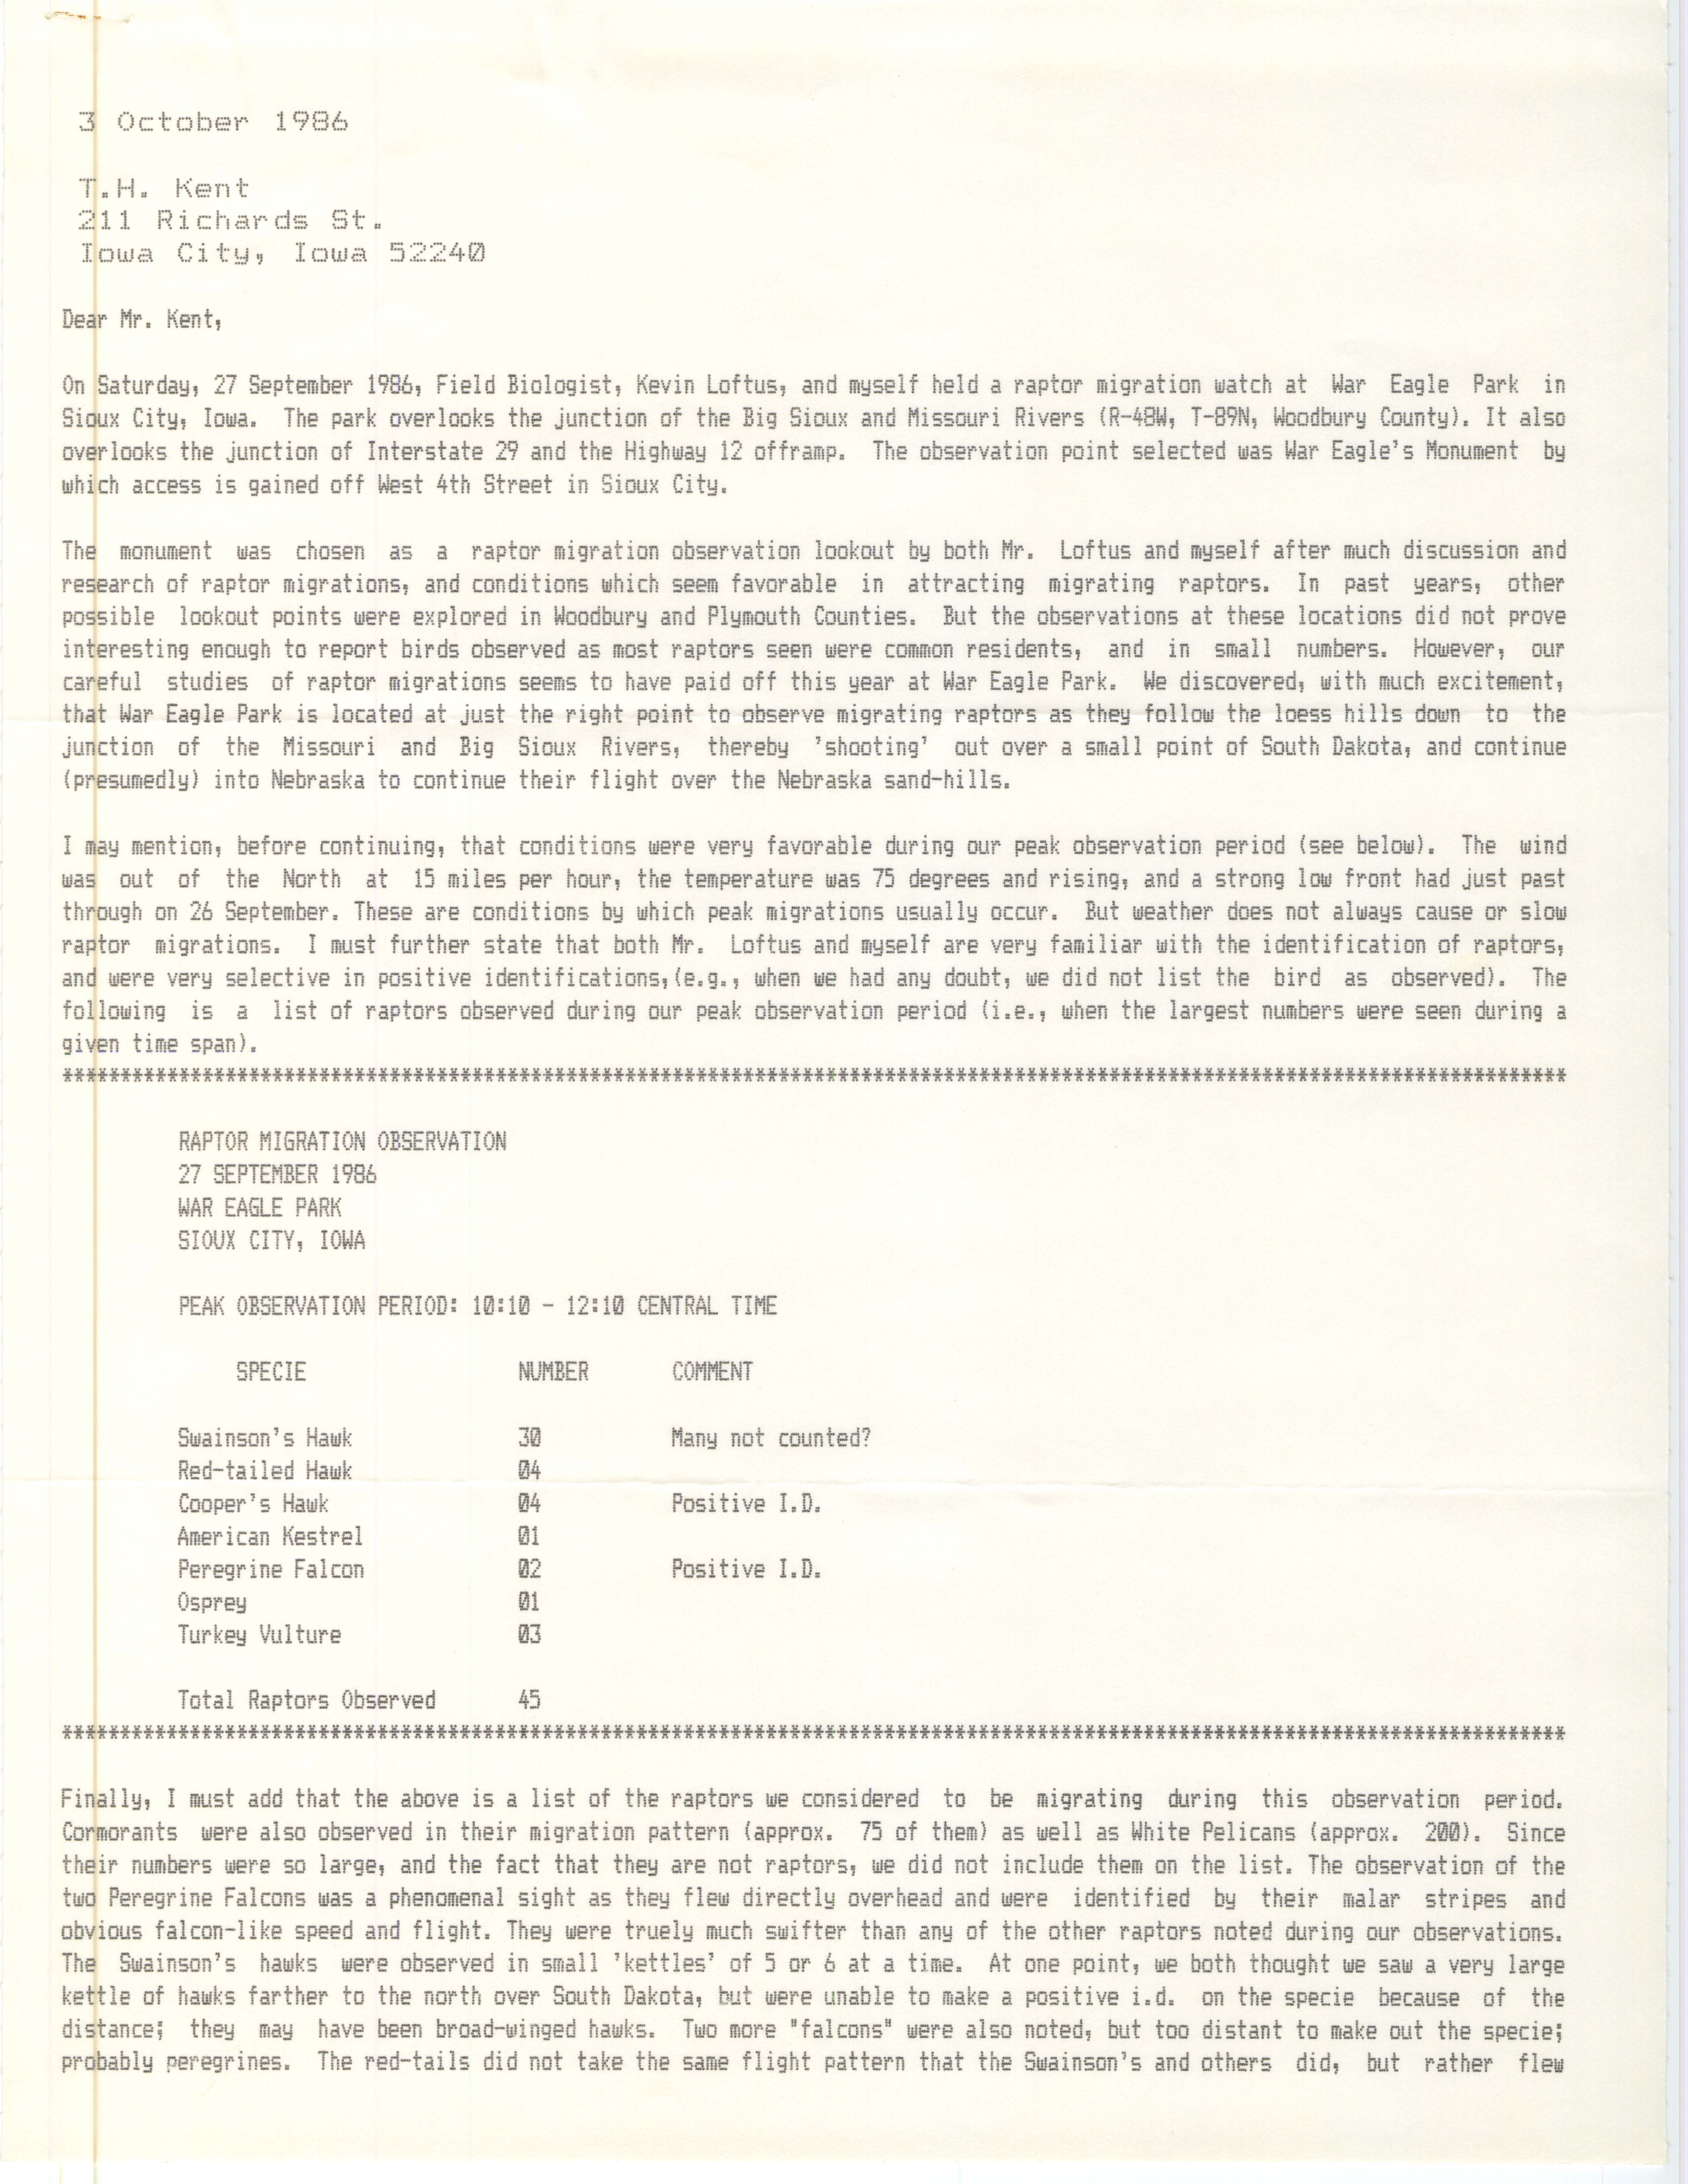 Douglas E. Trapp letter to Thomas H. Kent regarding raptor migration watch, October 3, 1986